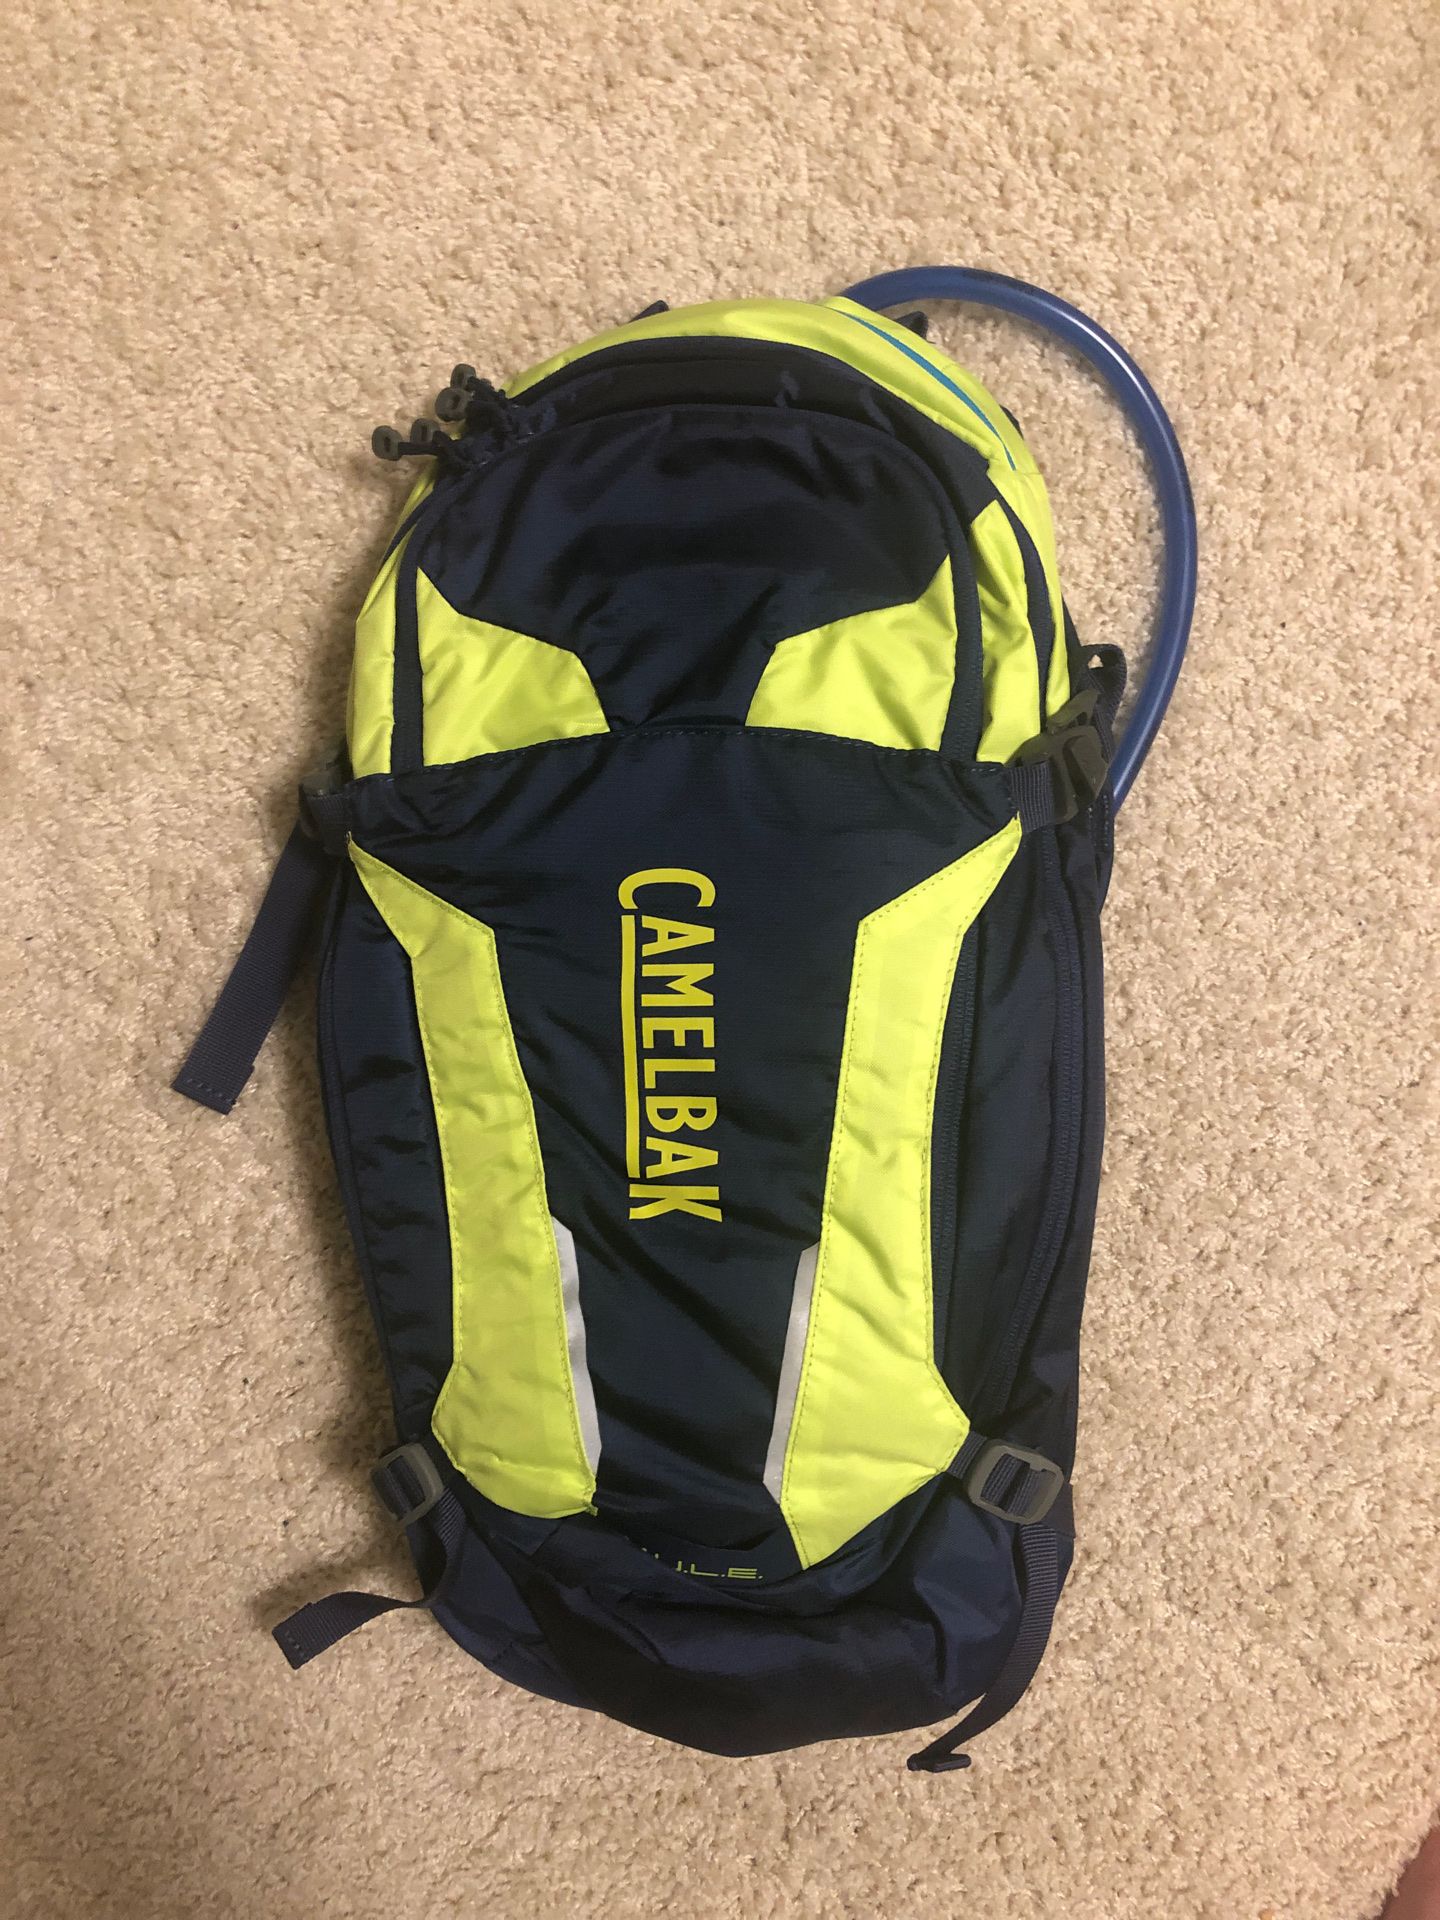 Brand New medium size Camelbak hydration backpack